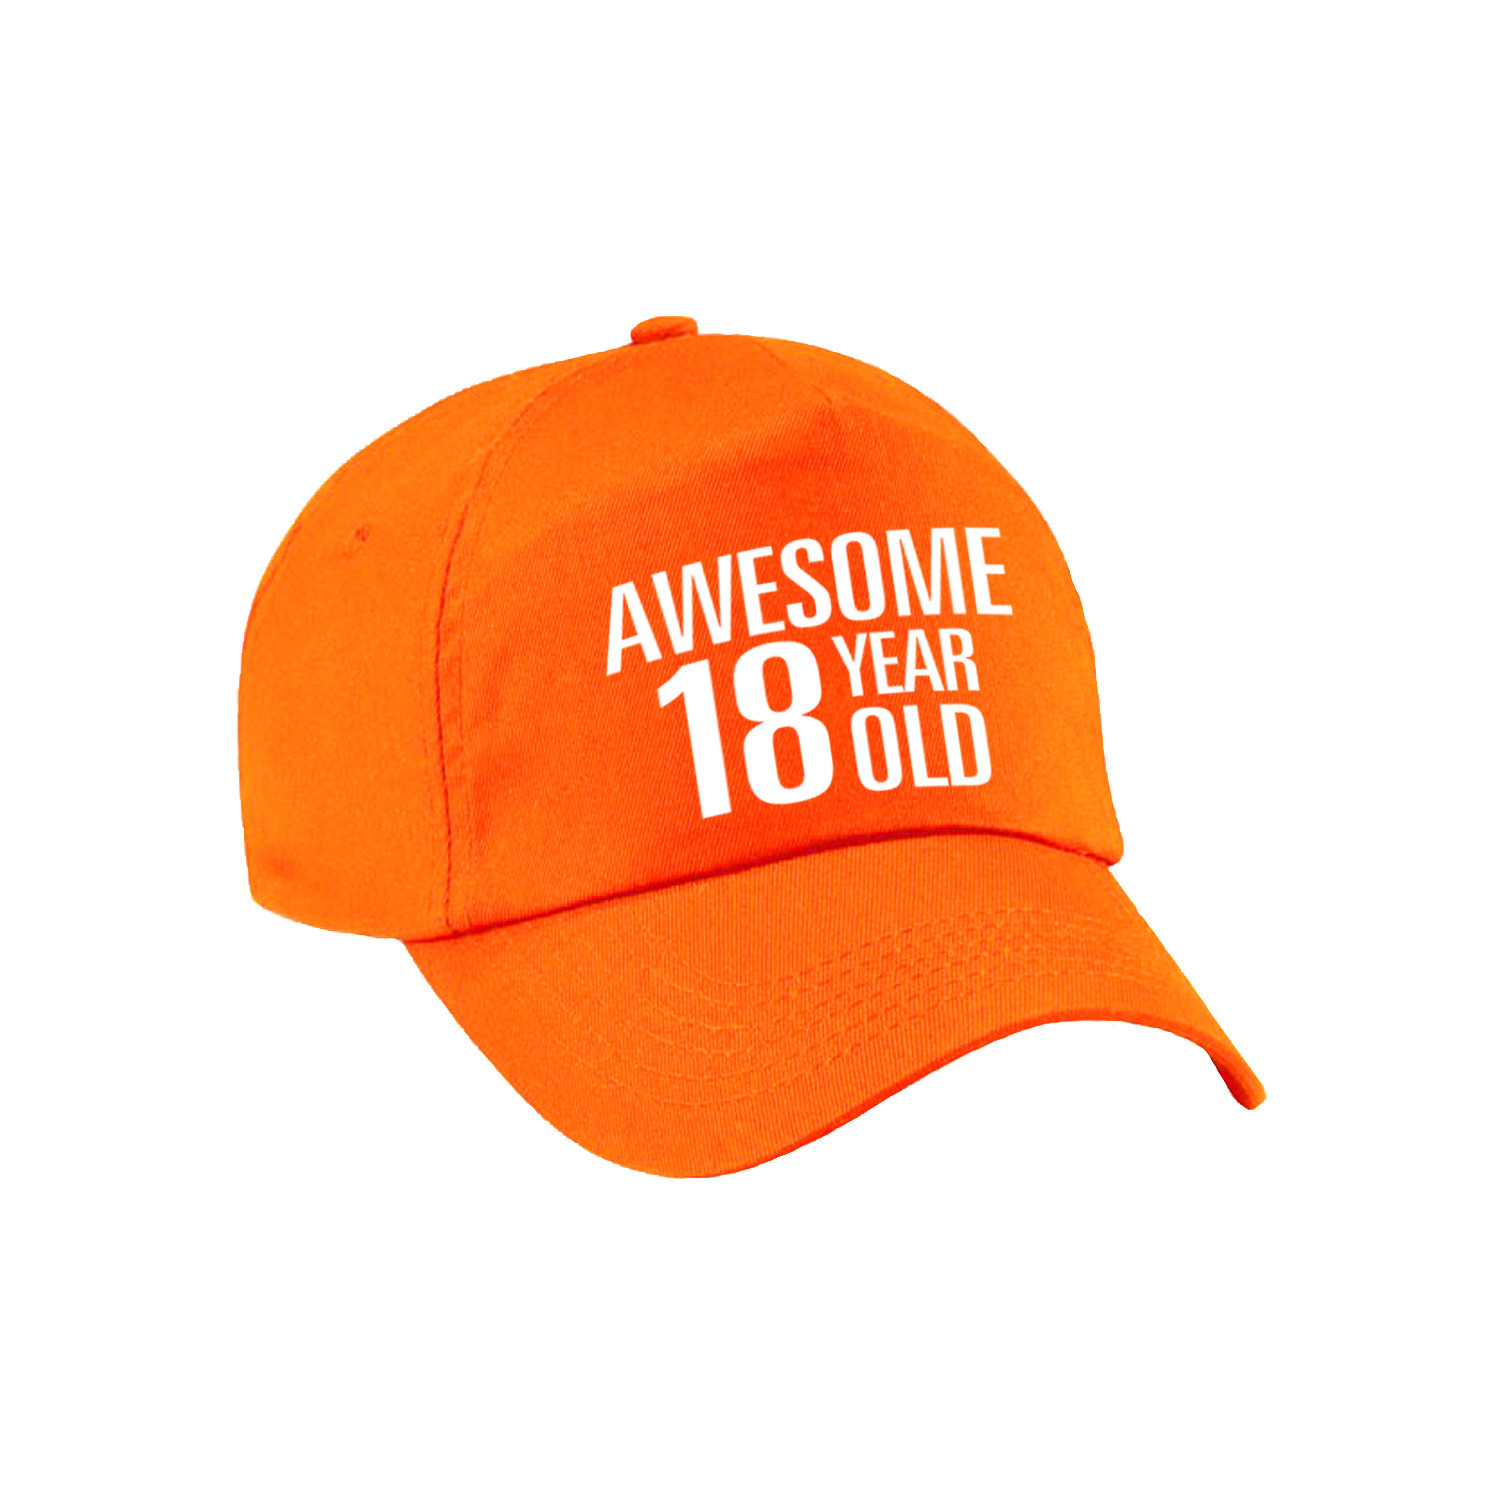 Awesome 18 year old verjaardag pet / cap oranje voor dames en heren